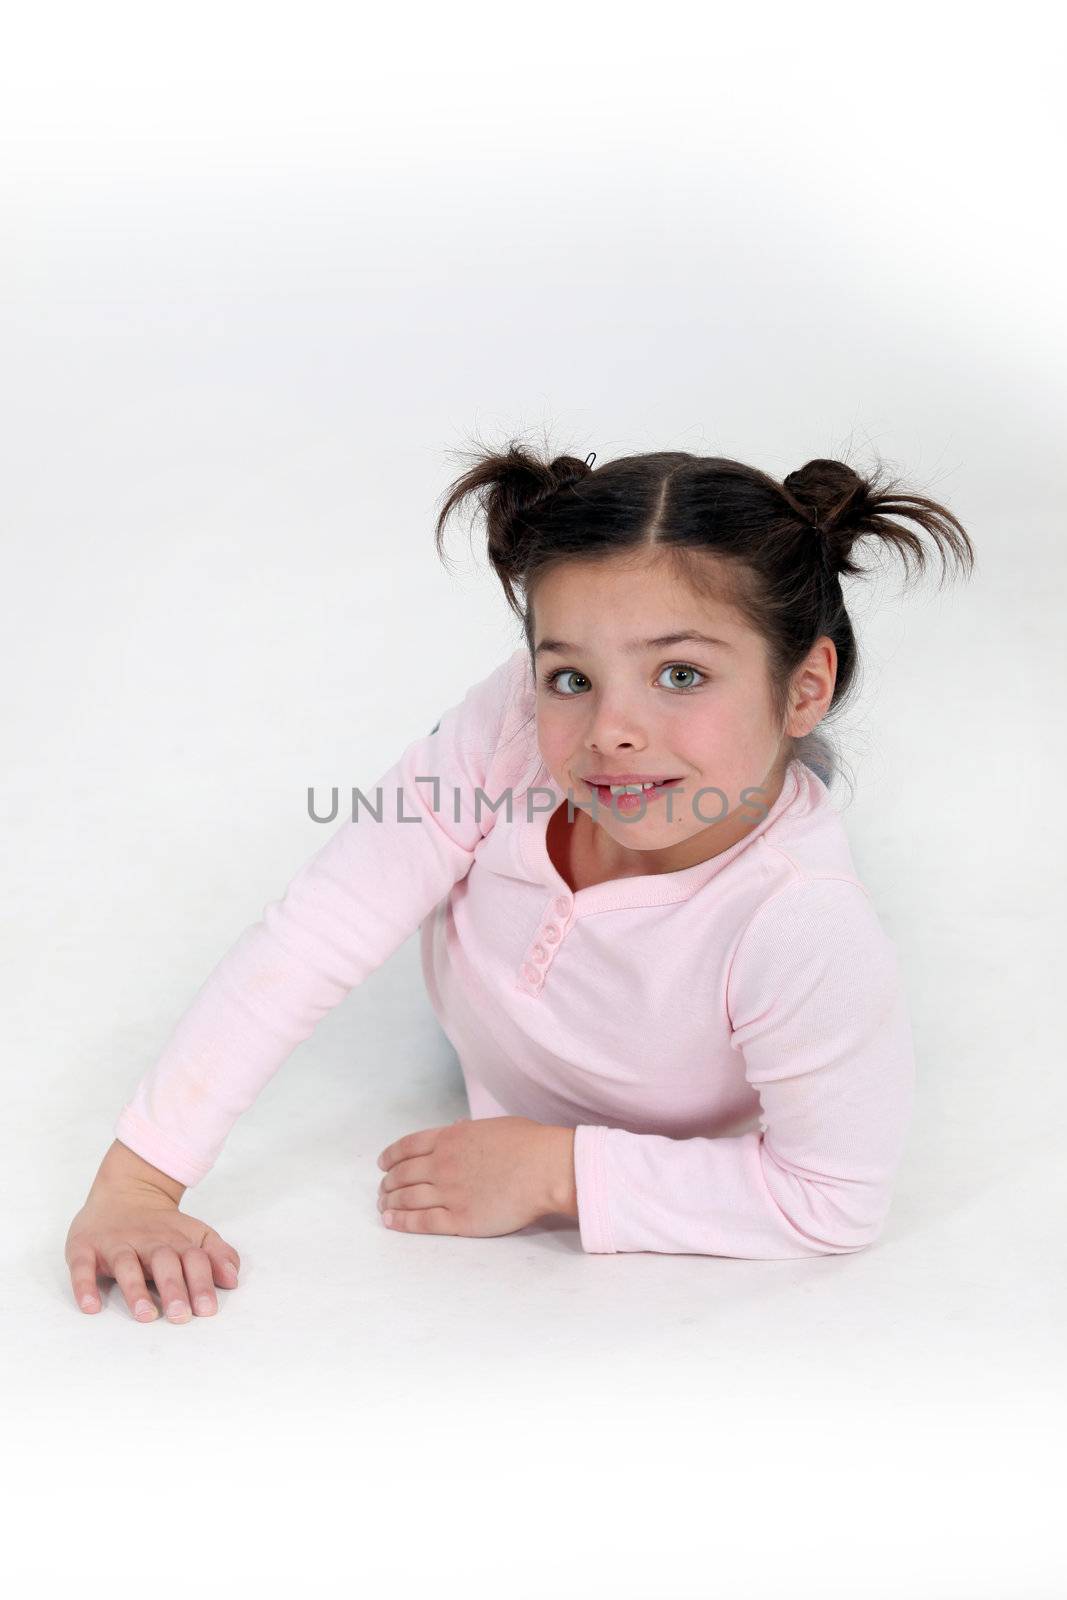 Little girl on fashion shoot